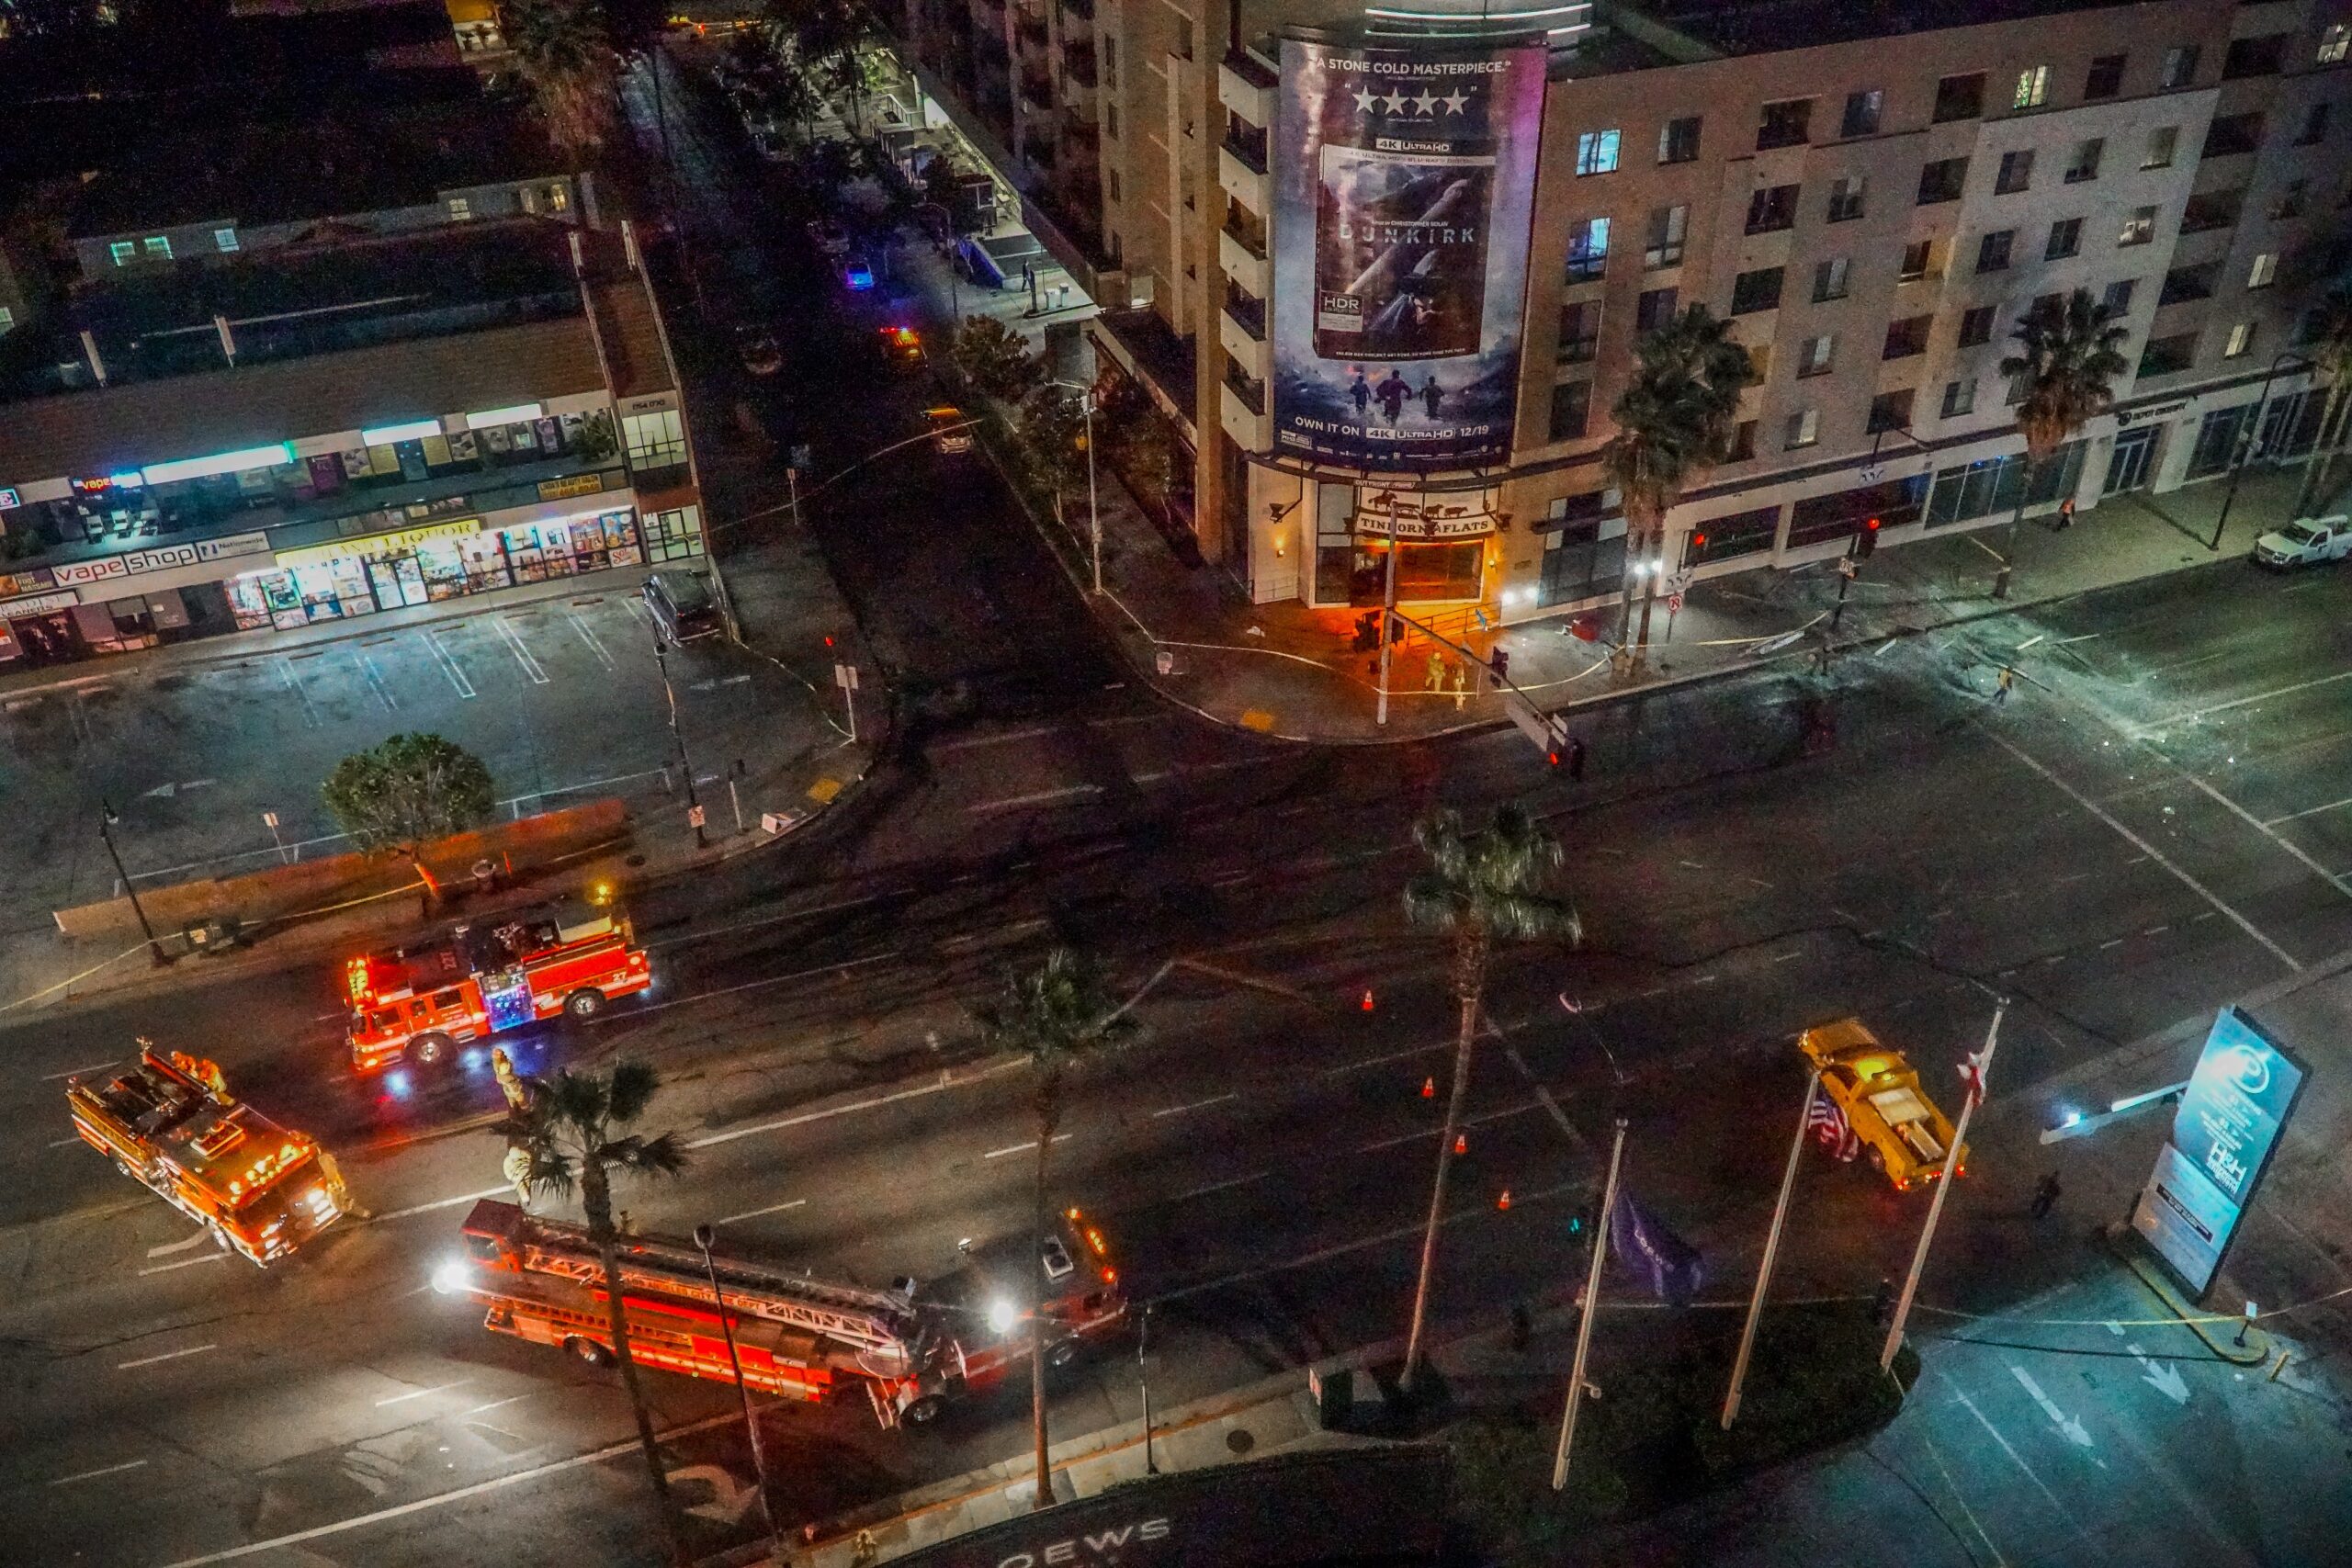 Emergency vehicles surrounding buildings at night